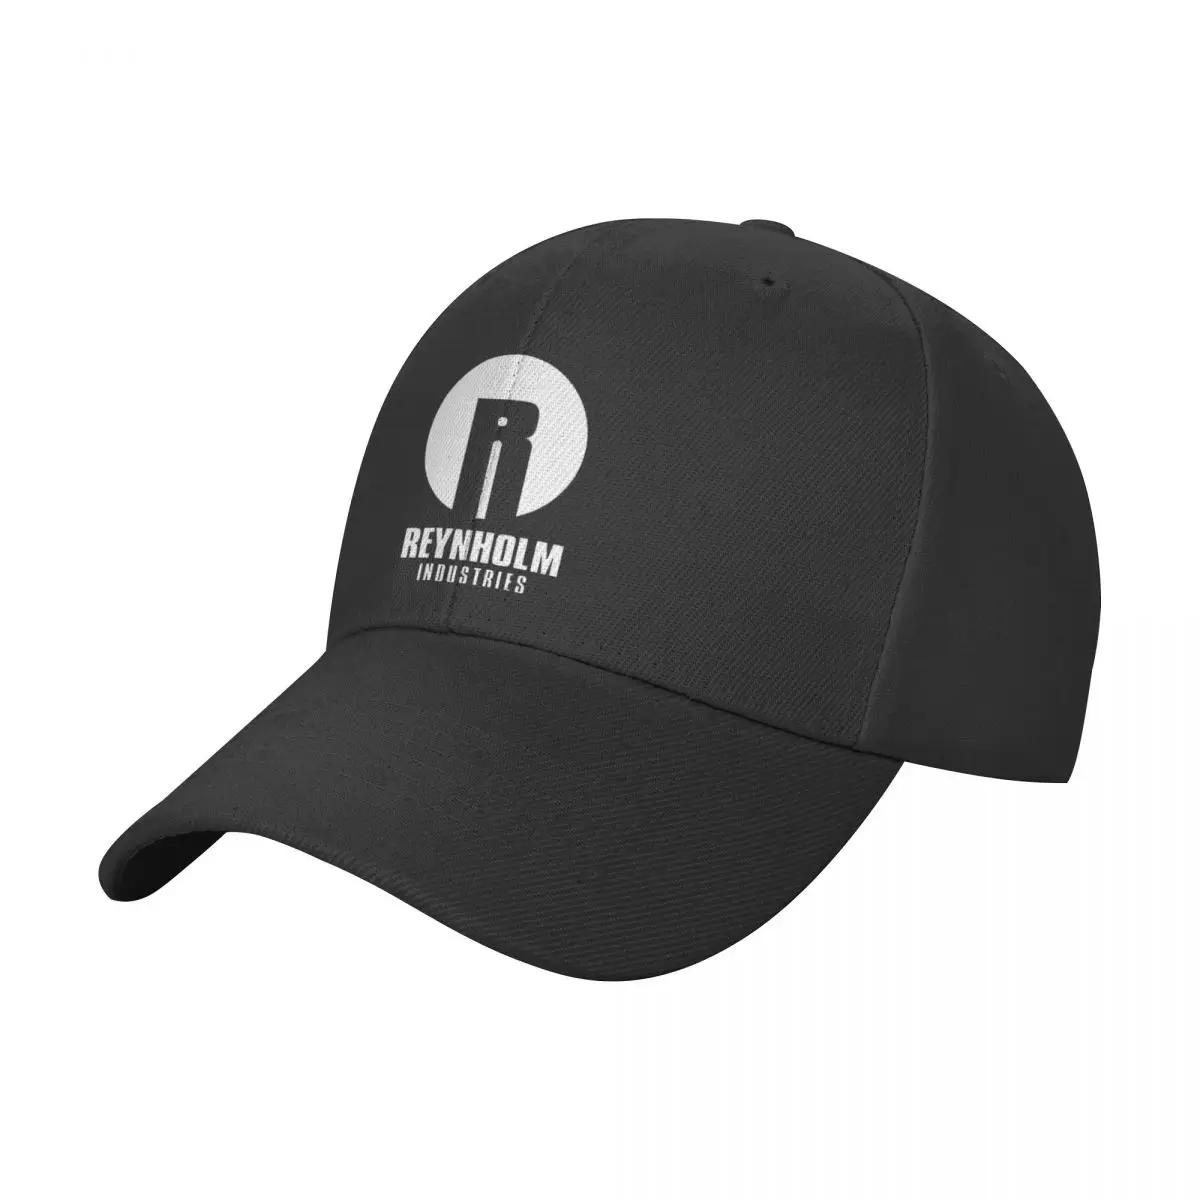 

Reynholm Industries Baseball Caps For Men Snapback Plain Solid Color Gorras Caps Hats Fashion Casquette Bone FemaLe Dad Cap